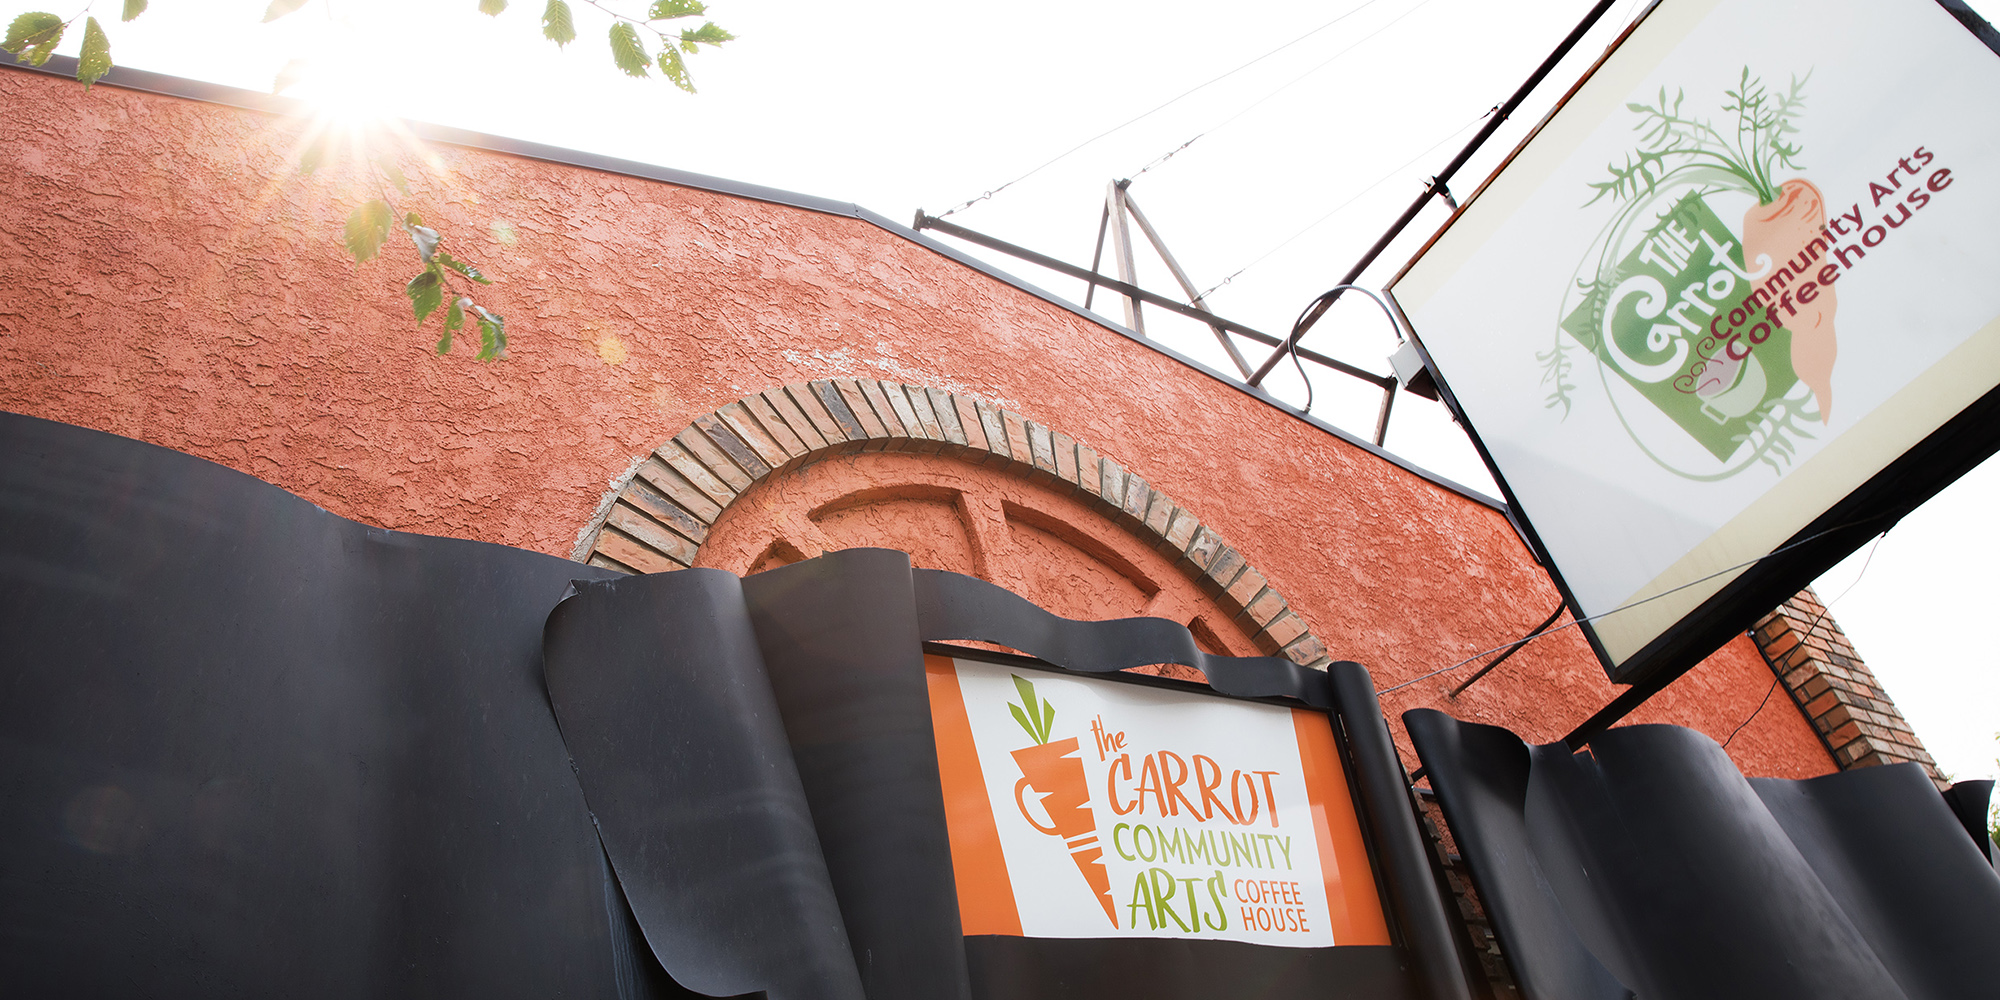 carrot community arts coffeehouse, edmonton, alberta avenue, 118 avenue